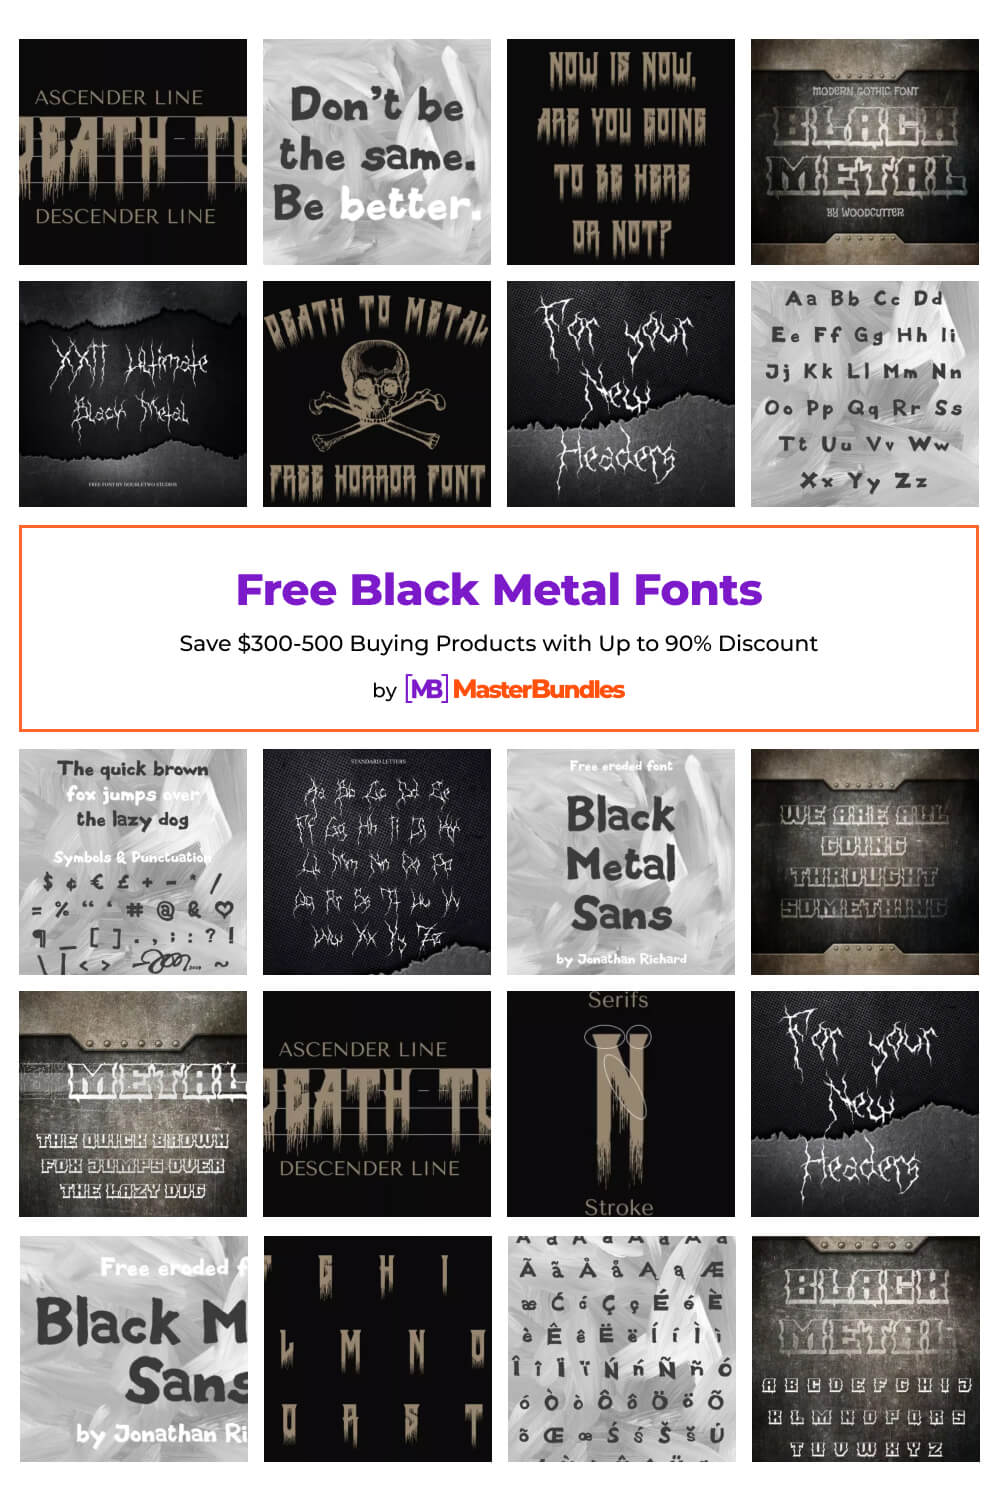 free black metal fonts pinterest image.